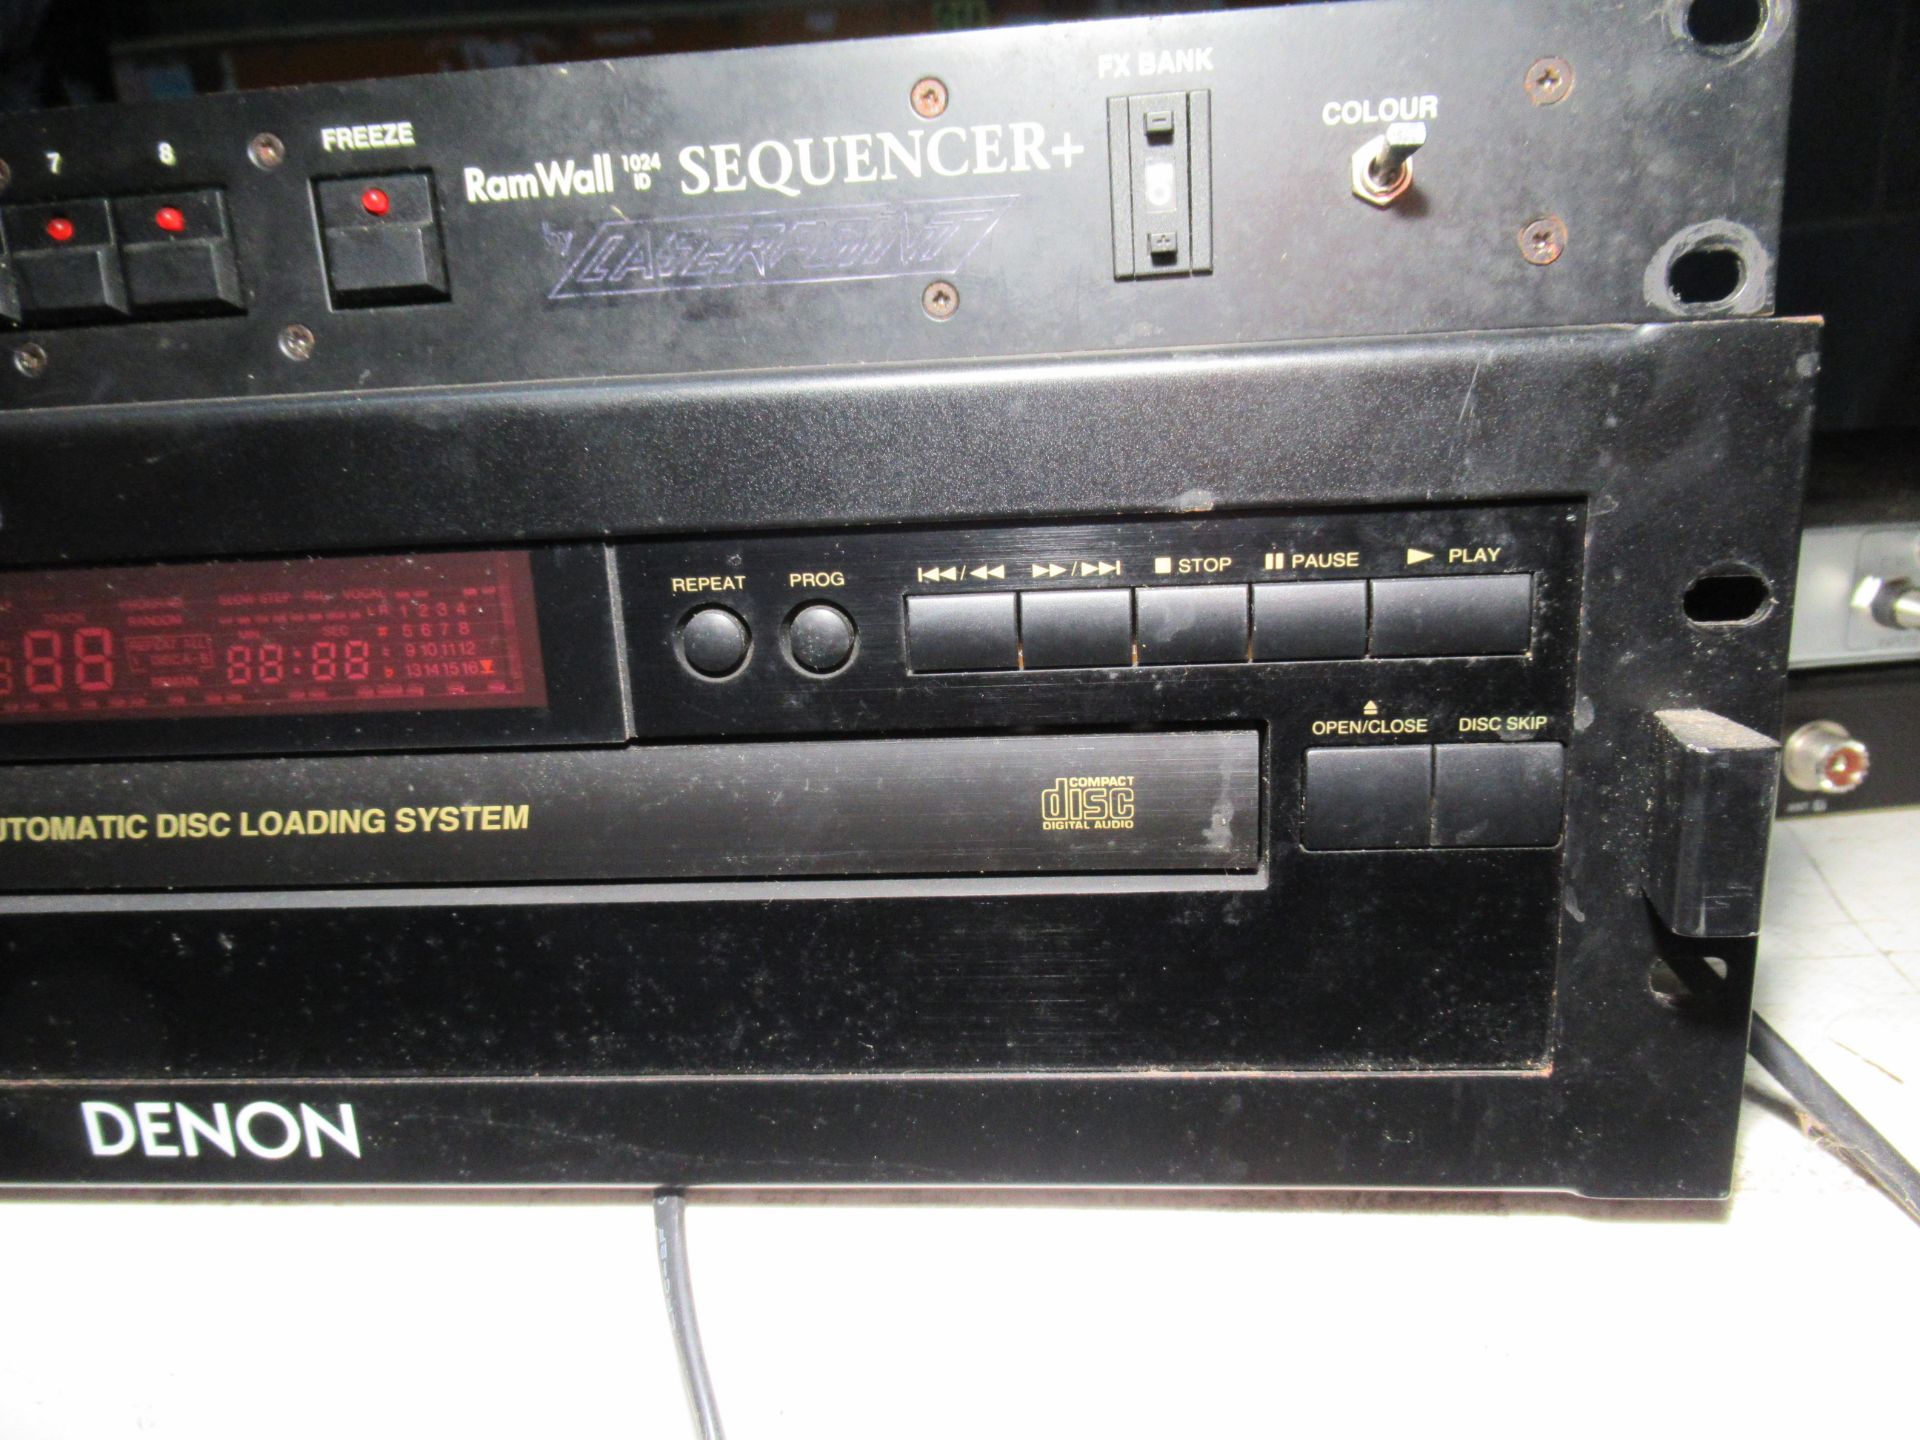 Denon DCM-270 5 Disc CD Player, Ram Wall 1042 Sequencer and a ELCA SR16 Super Regia Video Matrix Swi - Bild 5 aus 6